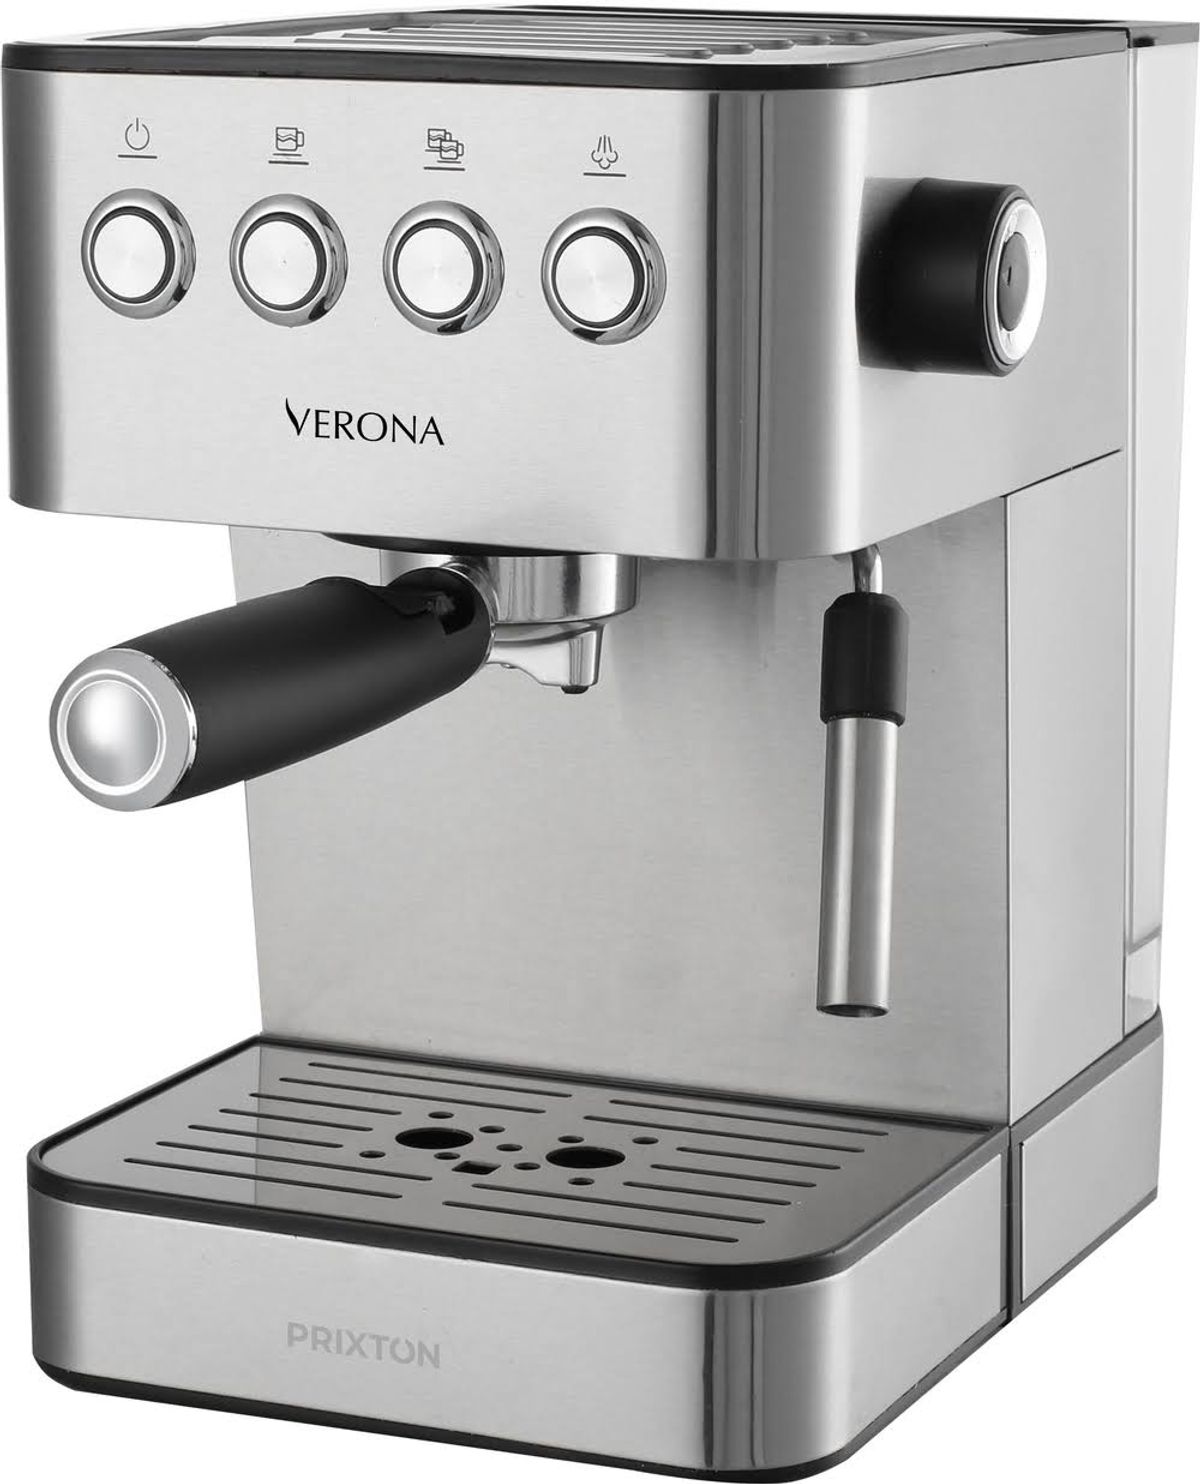 PRIXTON Verona Kaffeemaschine Silber